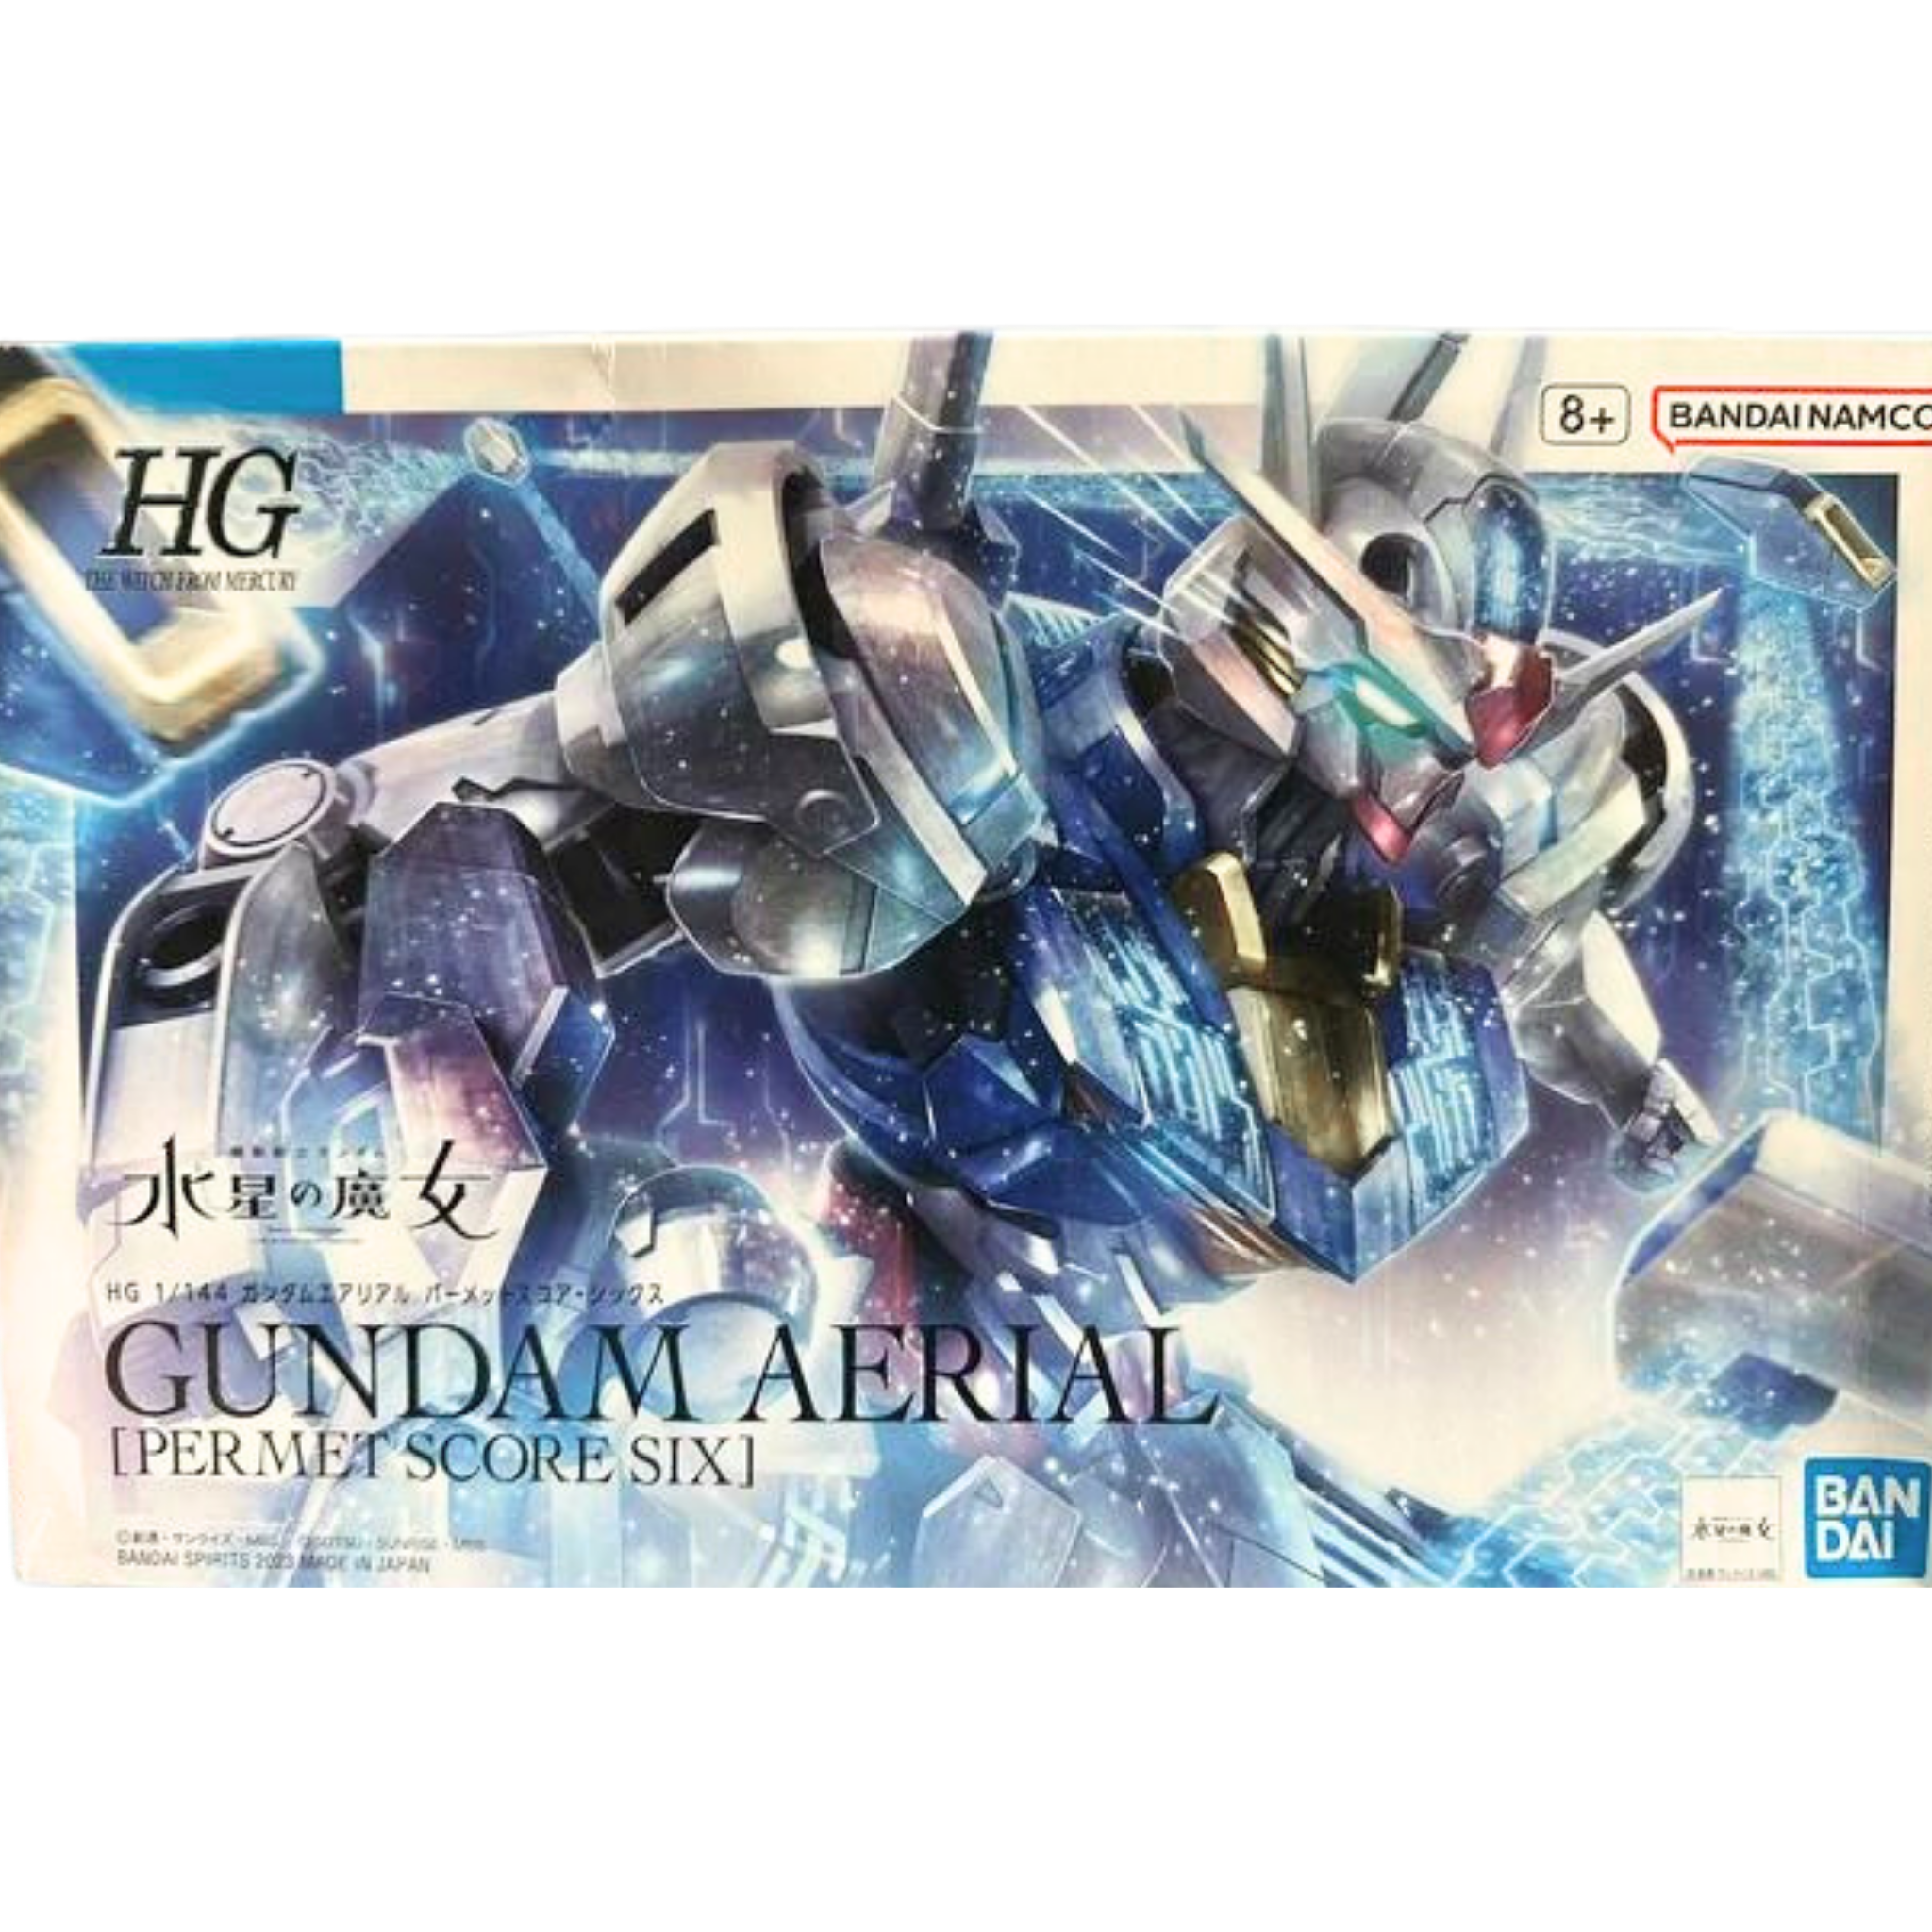 HG 1/144 Witch From Mercury Gundam Aerial Permet Score 6 #5065599 by Bandai